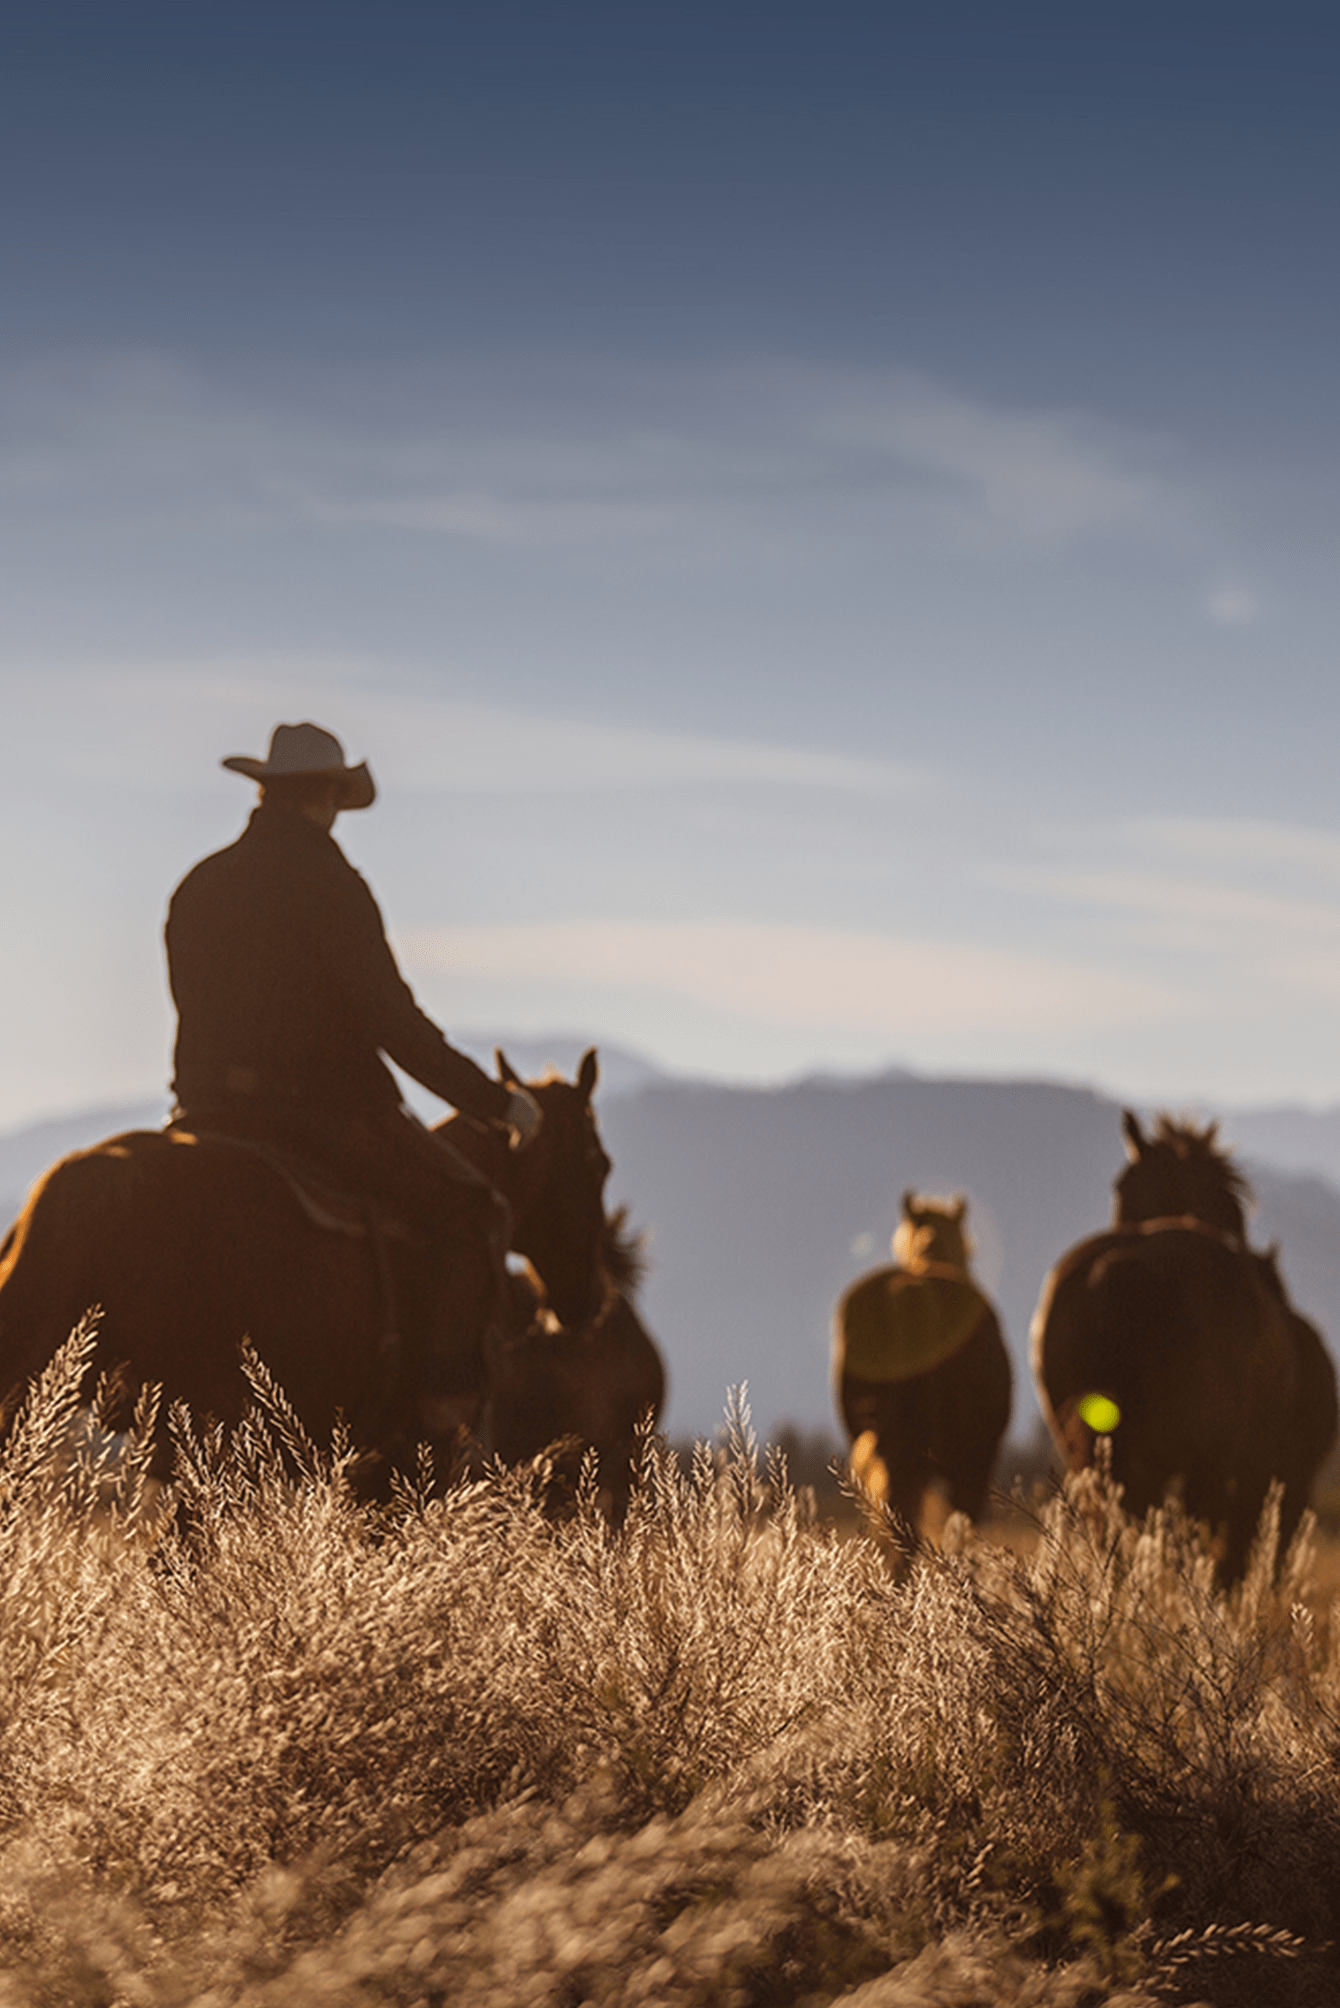 horseback riding - things to do in jackson hole